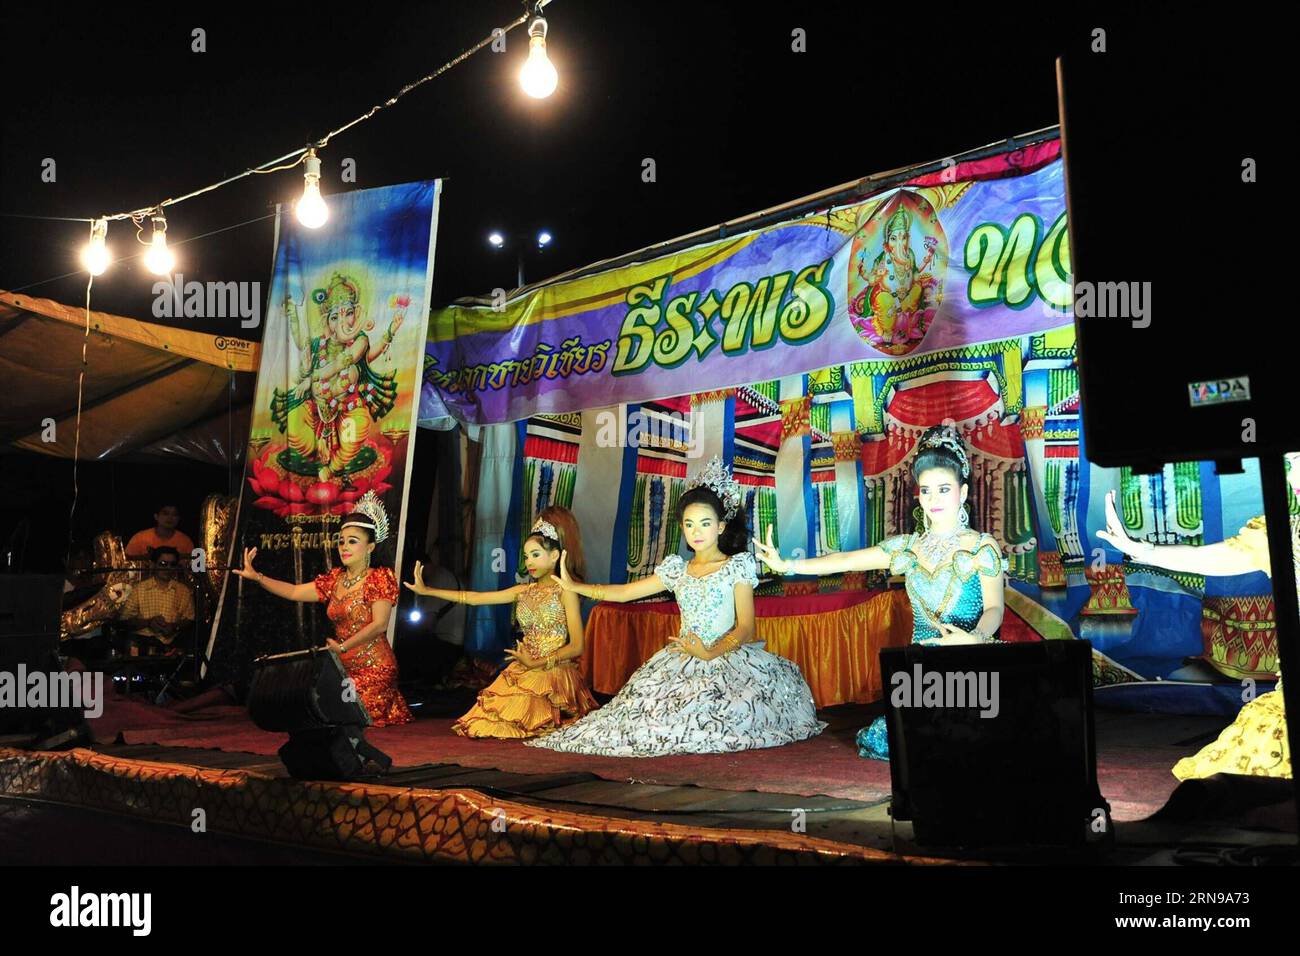 (151126) -- BANGKOK, le 25 novembre 2015 -- des acteurs se produisent lors d'un spectacle dramatique traditionnel thaïlandais (opéra thaïlandais) à Bangkok, Thaïlande, le 25 novembre 2015.) THAILAND-BANGKOK-THAI OPERA RachenxSageamsak PUBLICATIONxNOTxINxCHN 151126 Bangkok nov. 25 2015 les acteurs jouent lors d'une représentation dramatique traditionnelle thaïlandaise spectacle d'opéra thaïlandais à Bangkok Thai Country nov. 25 2015 Thai Country Bangkok Thai Opera RachenxSageamsak PUBLICATIONxNOTxINxCHN Banque D'Images